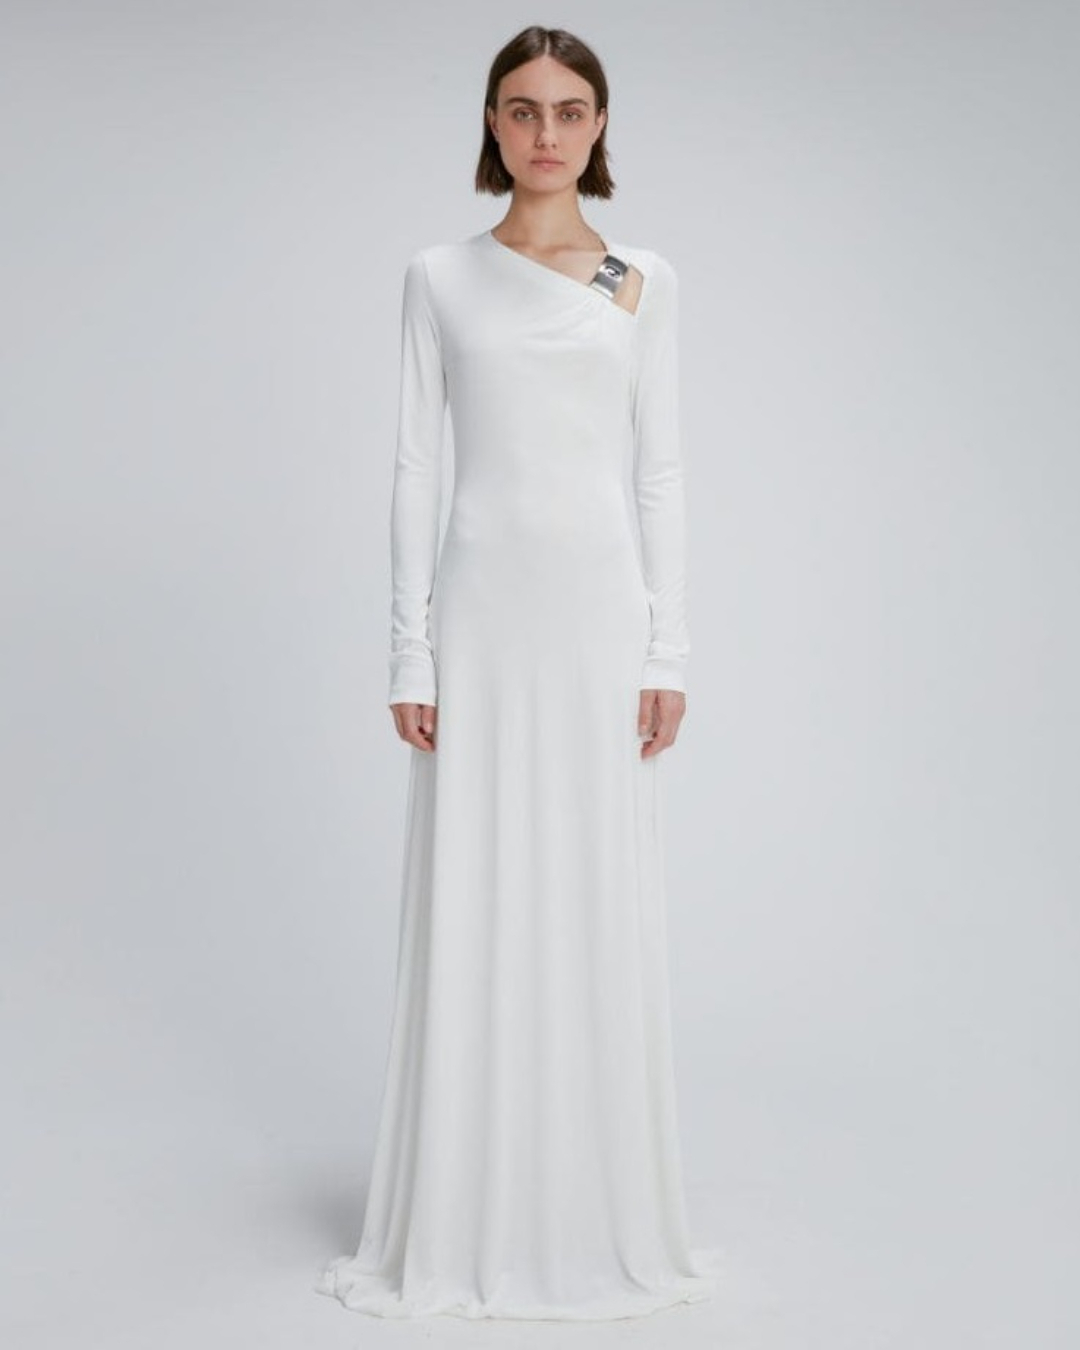 Top 12 Elegant Bridal Dresses for Autumn